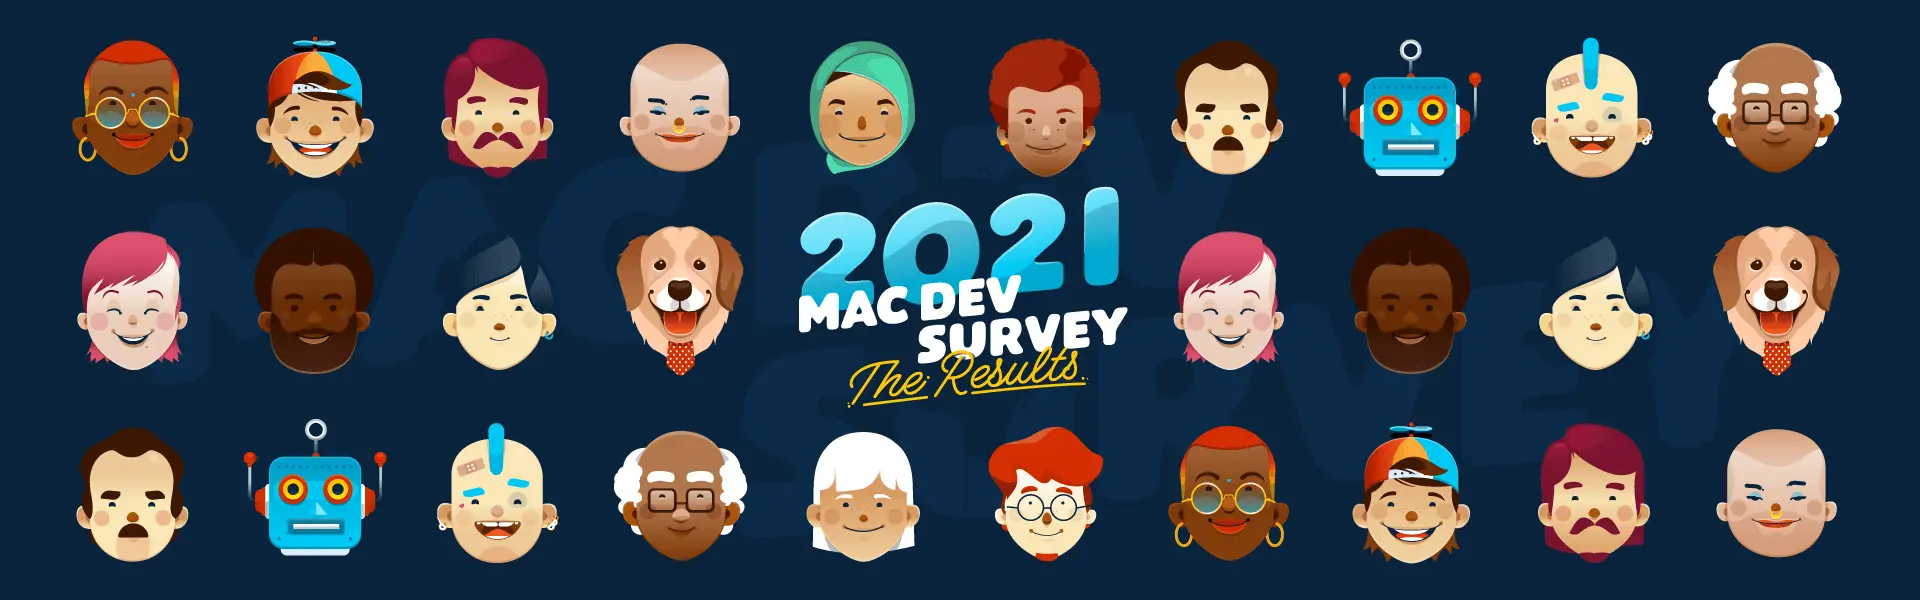 Mac Dev Survey 2021 非常有意思的 Mac 开发者调查问卷